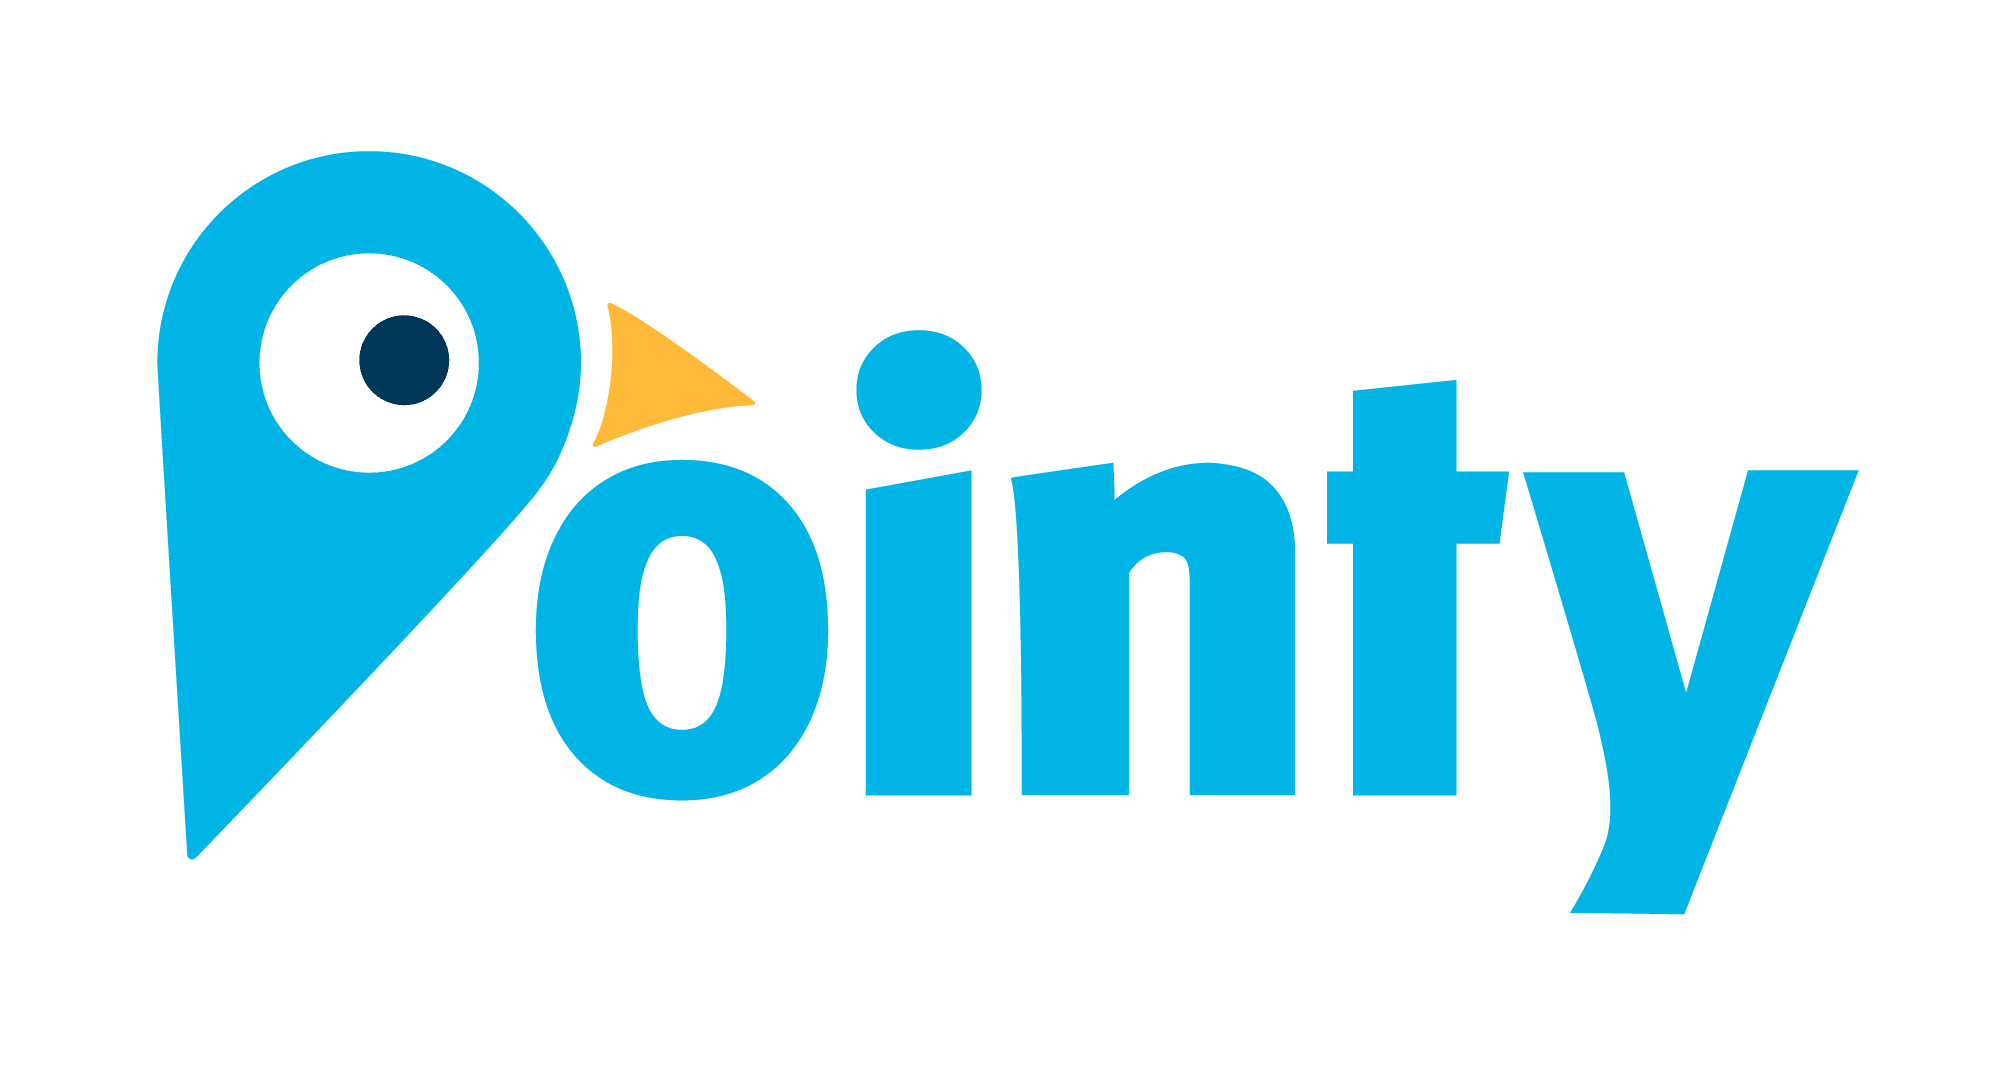 Pointy from google logo